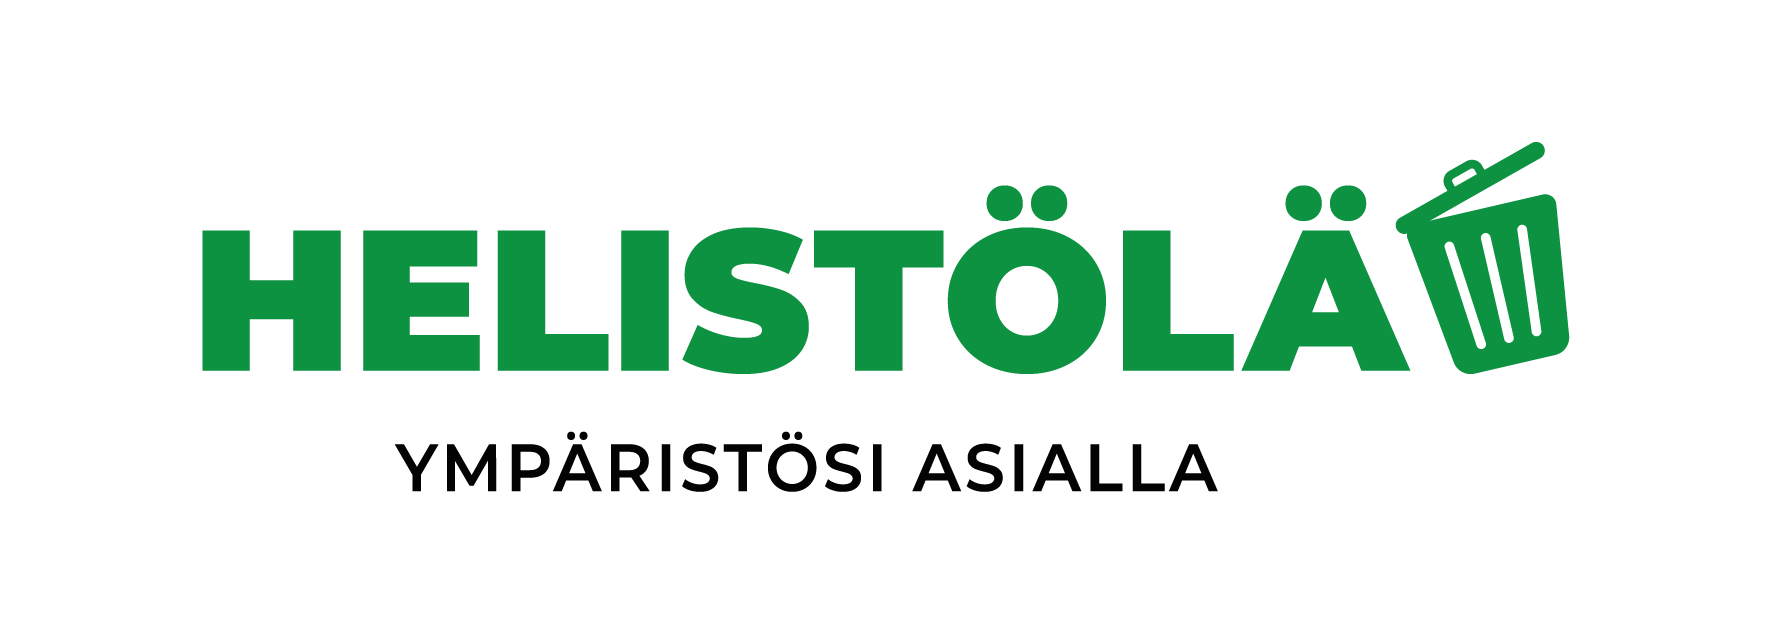 Jätehuolto M. Helistölä Oy:n logo